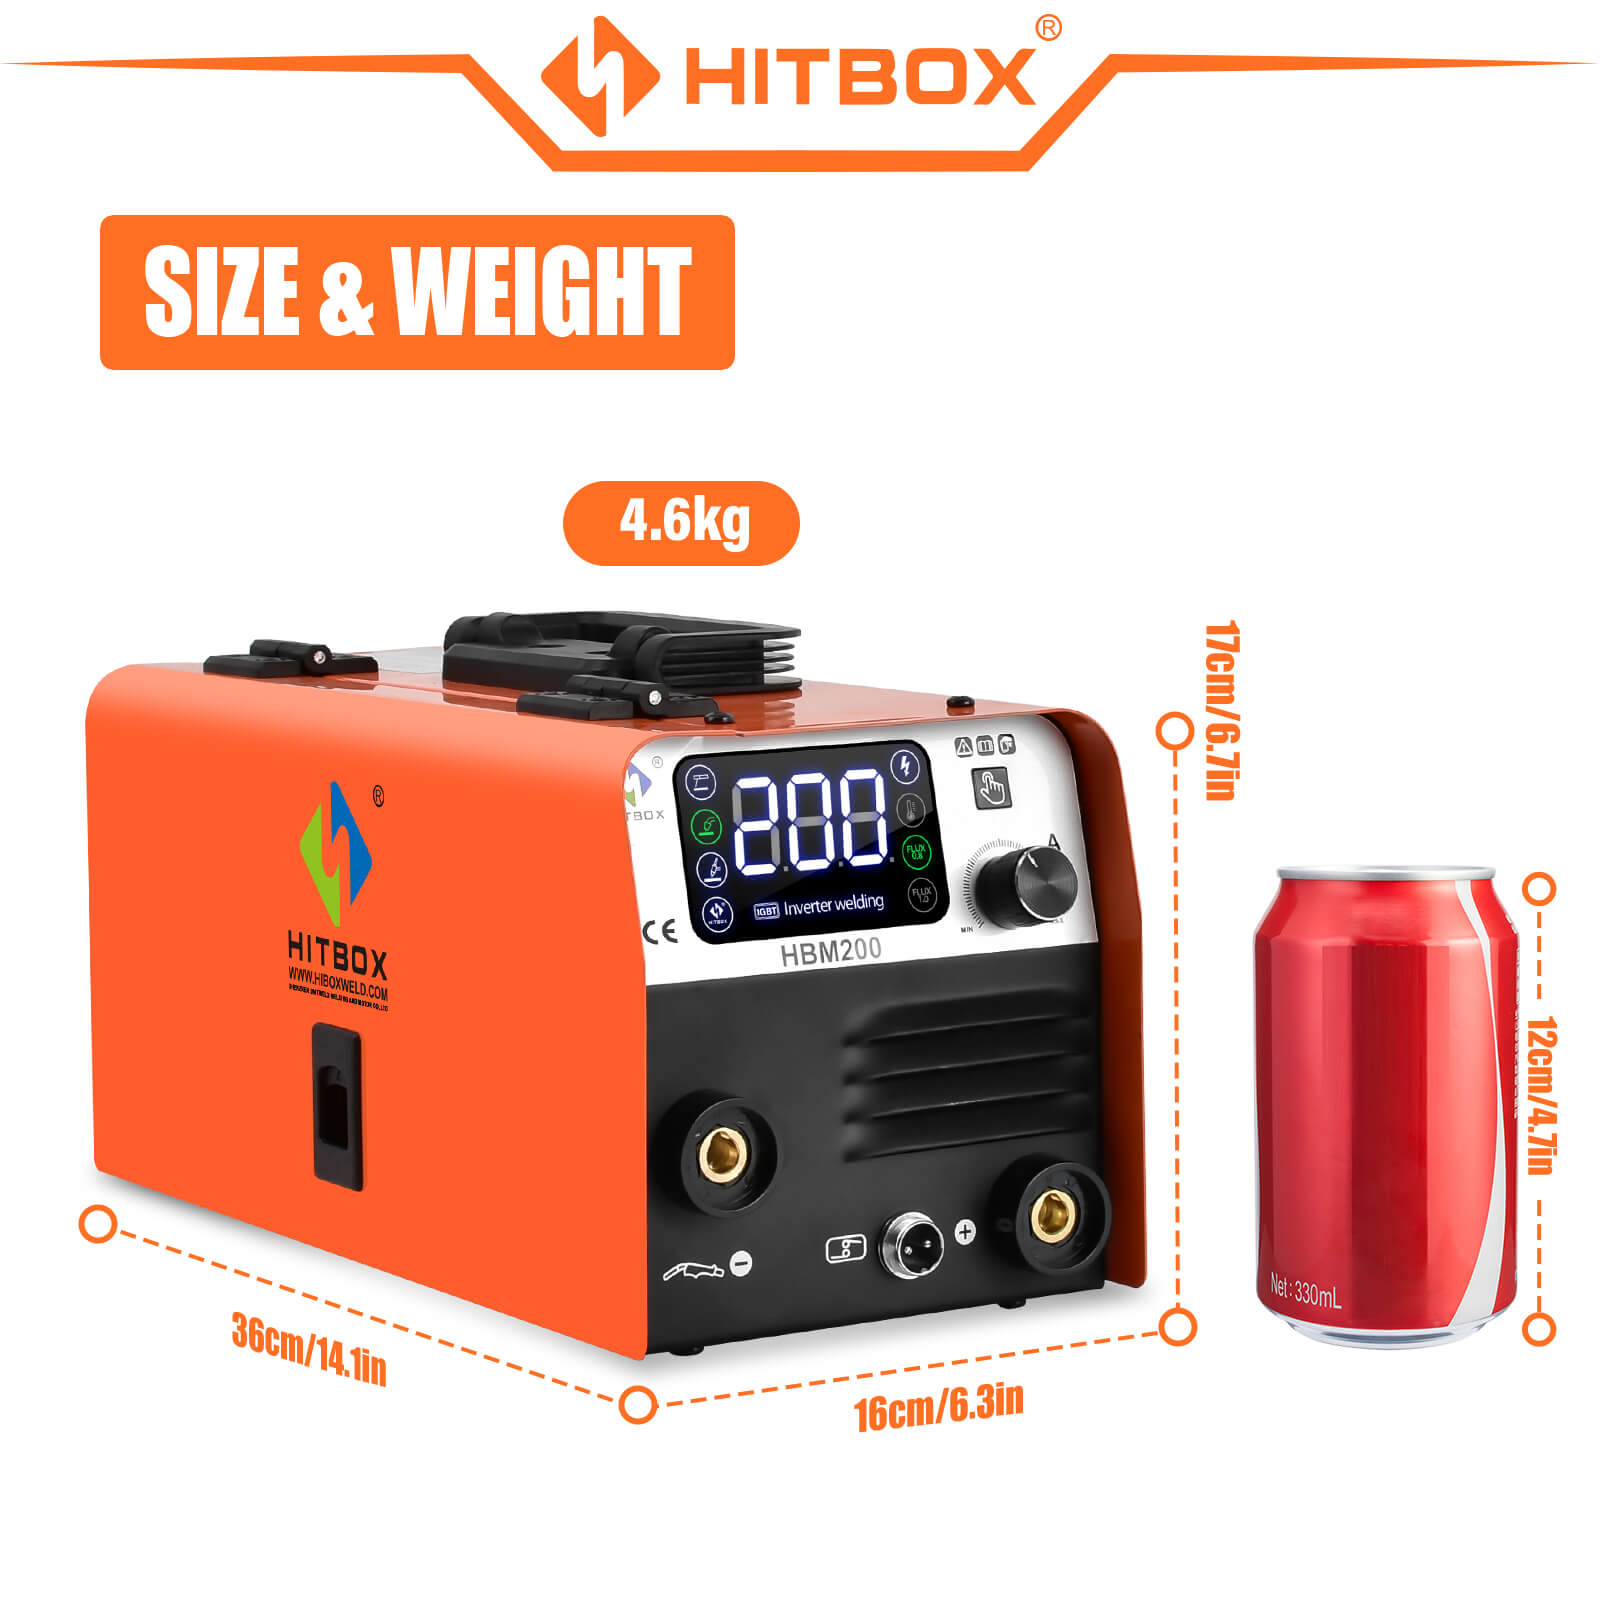 HITBOX HBM200 3 in 1 MIG Welder